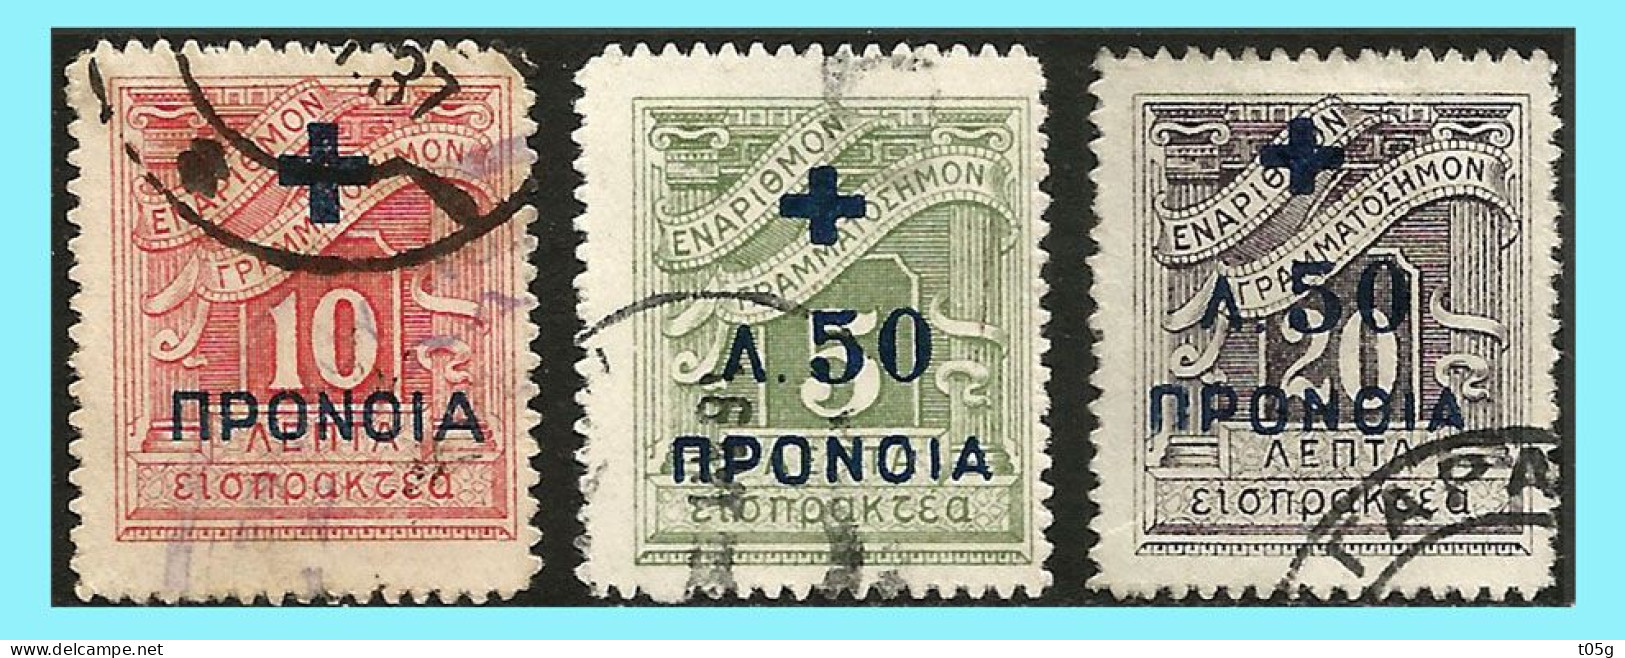 GREECE-GRECE - HELLAS 1937-38: With Accent On GRAMMAT ό SHMON  Postal Due With Blue Overpr  Compl. Set Used - Wohlfahrtsmarken